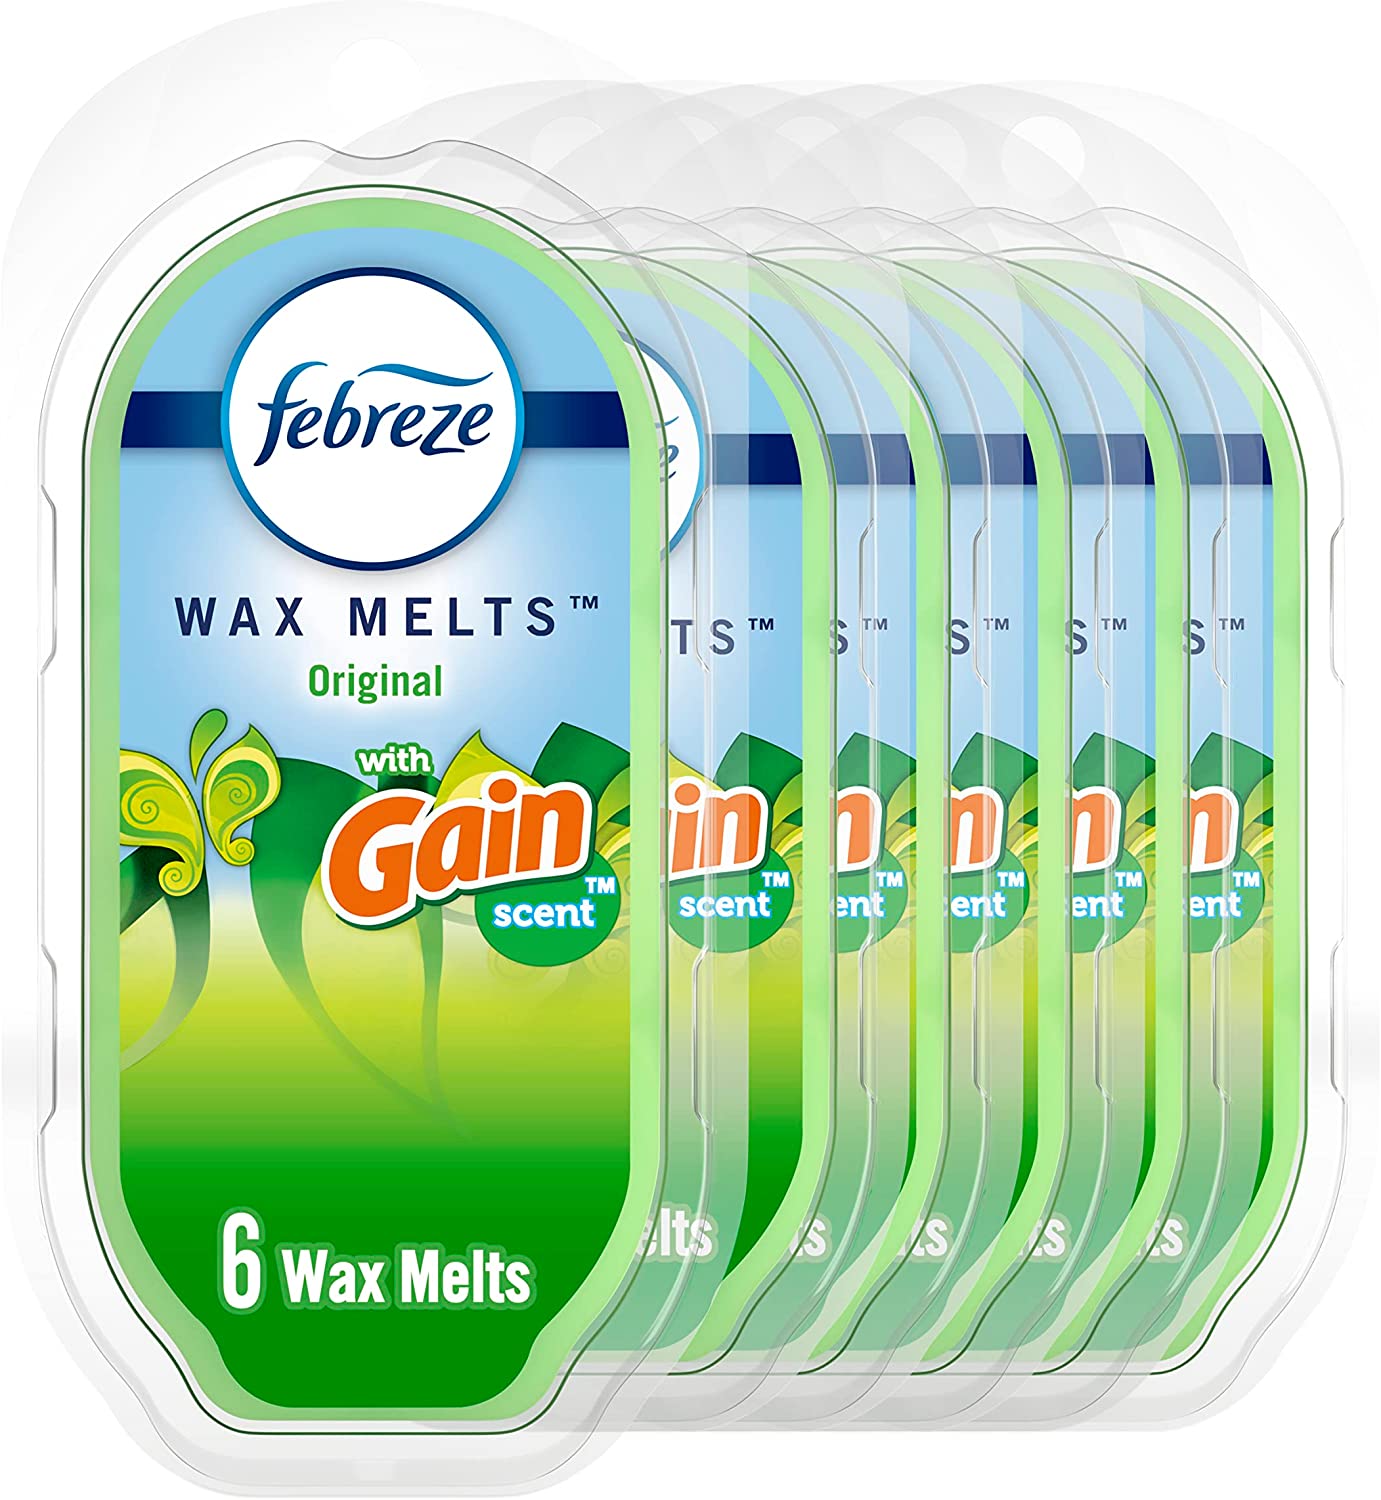 Febreze Unstopables Premium Wax Melts - Fresh Scent - 8 Count Wax Melts Per  Package - Net Wt. 3 OZ (85 g) Per Package - Pack of 3 Packages